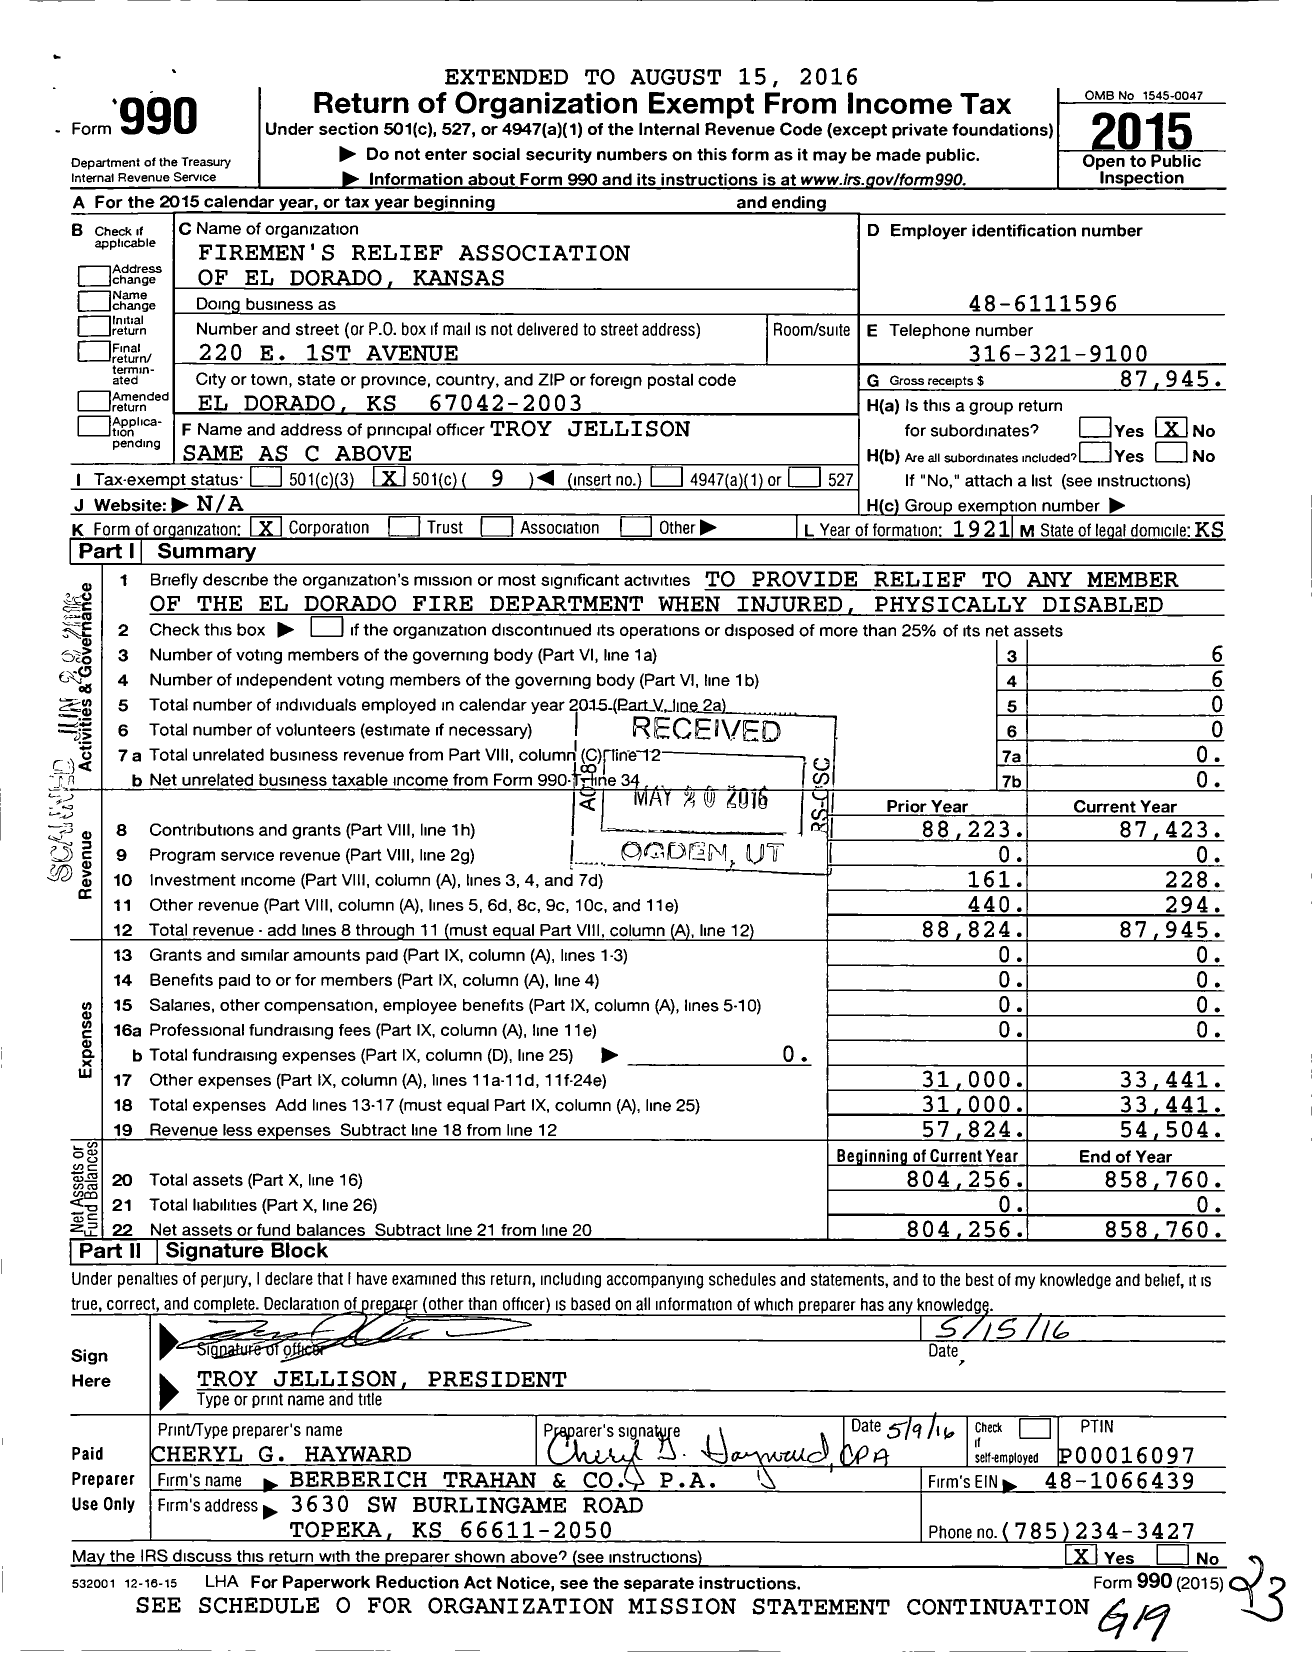 Image of first page of 2015 Form 990O for Firemens Relief Association of El Dorado Kansas